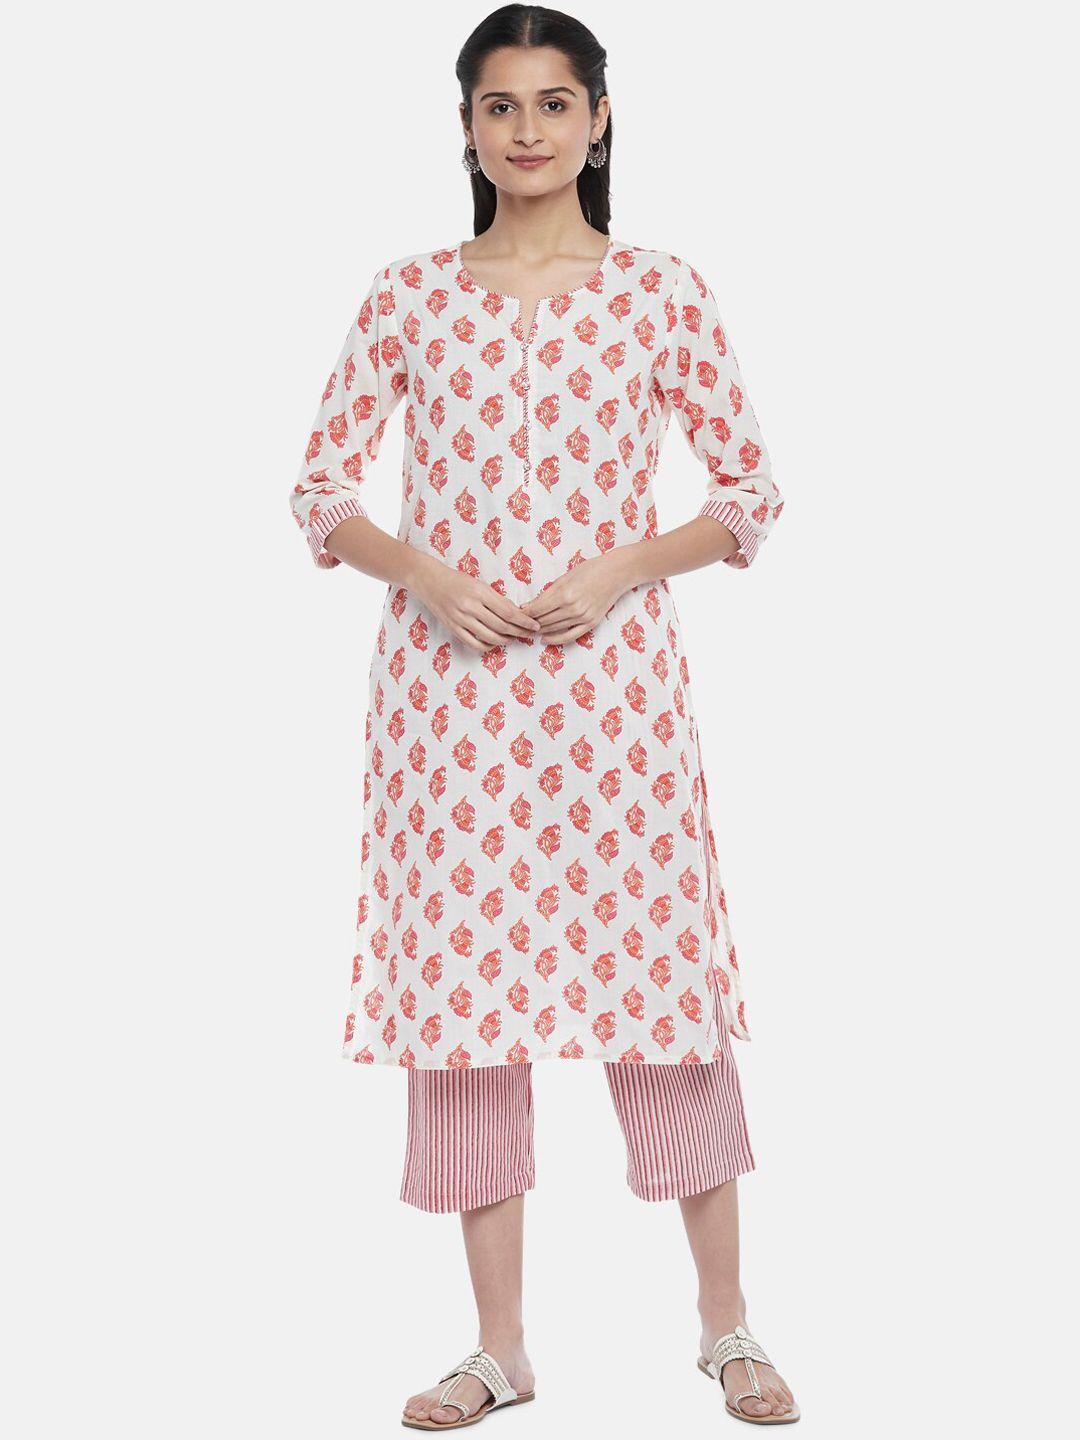 rangmanch by pantaloons women pink ethnic motifs printed pure cotton kurti with palazzos